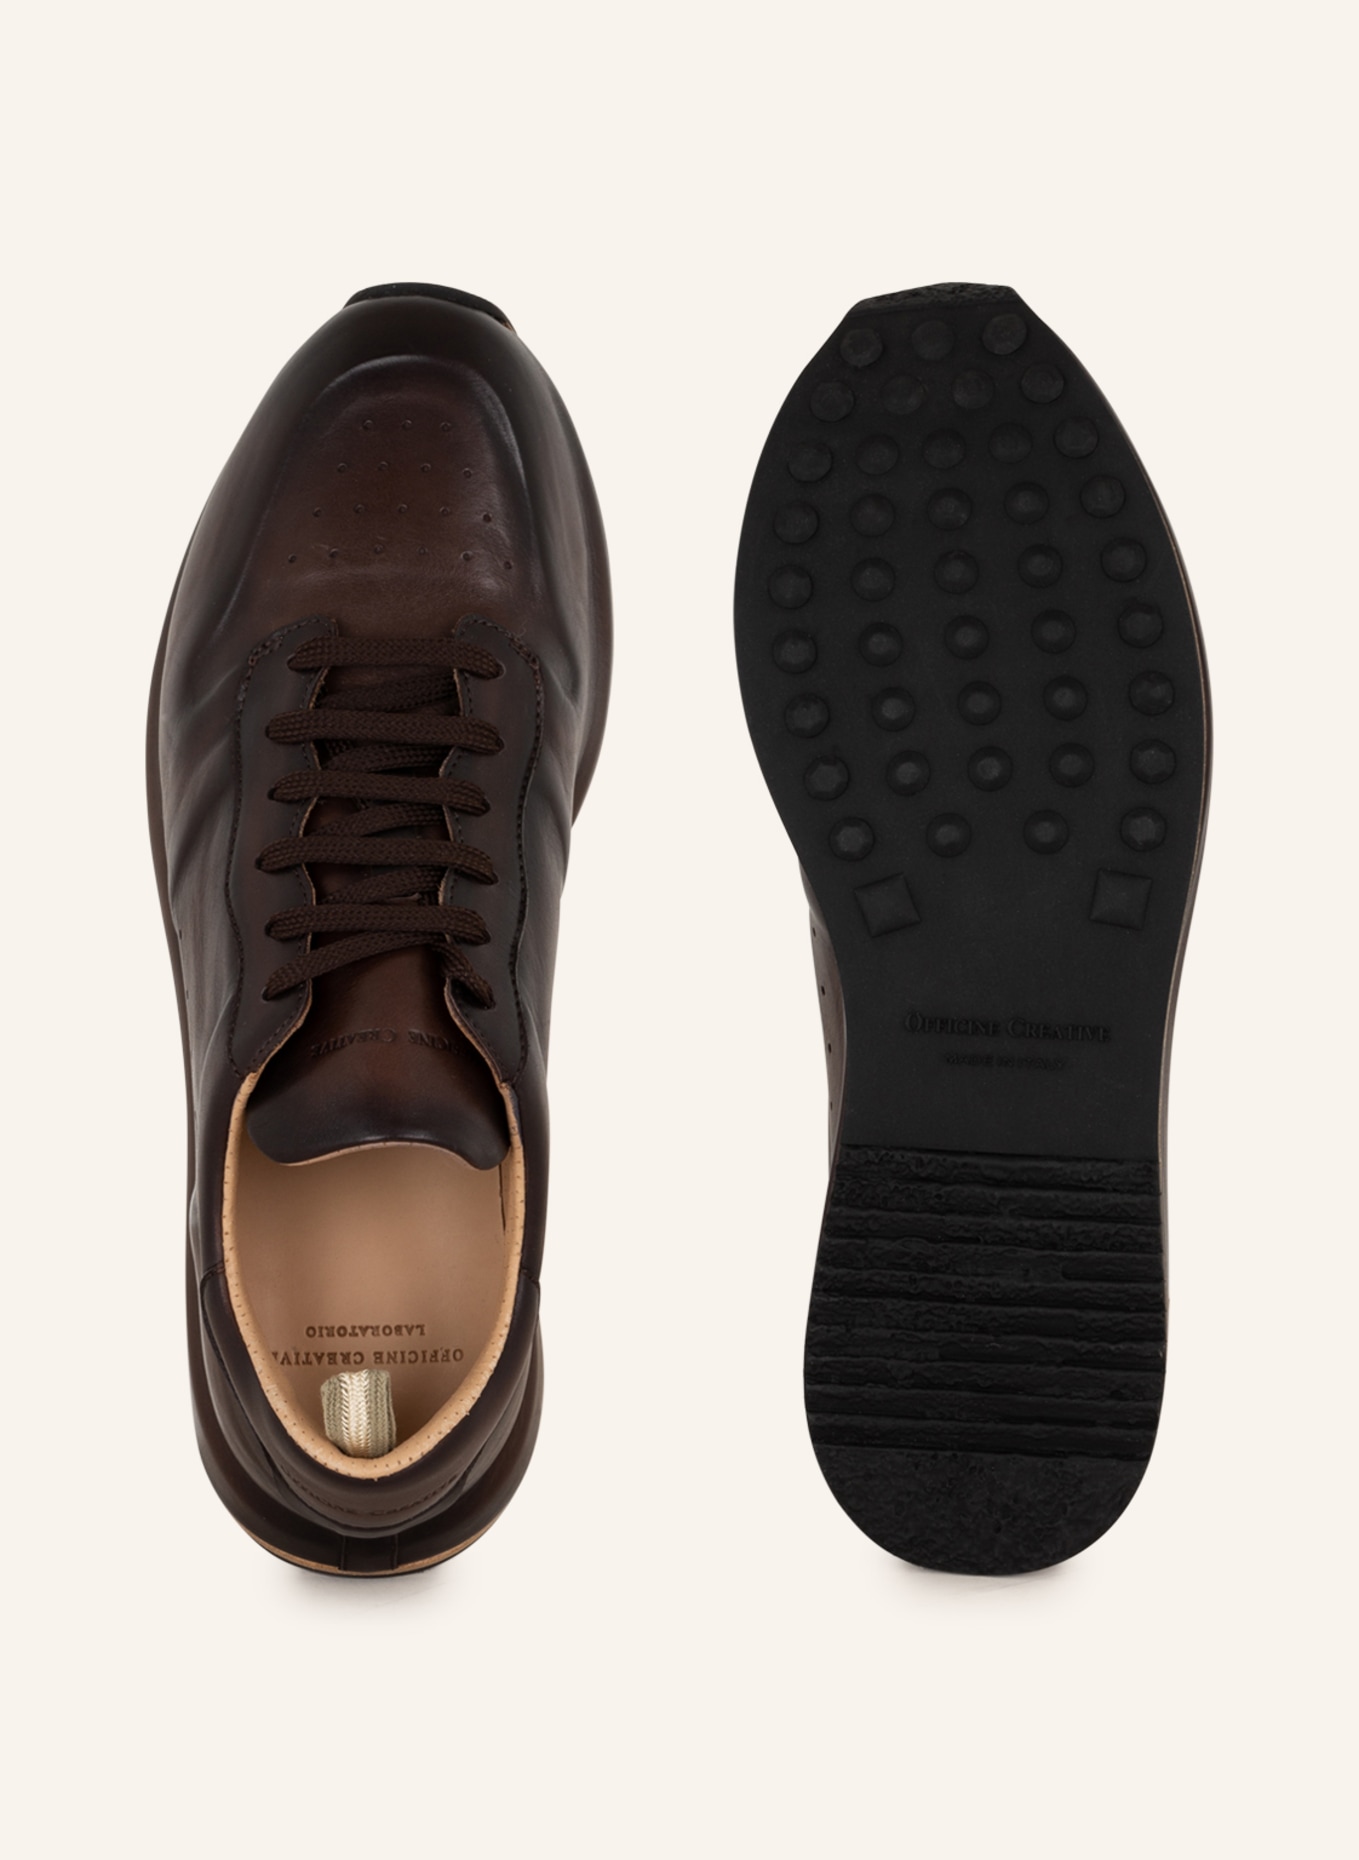 Men brown leather sneakers RACE LUX 003 – Officine Creative EU